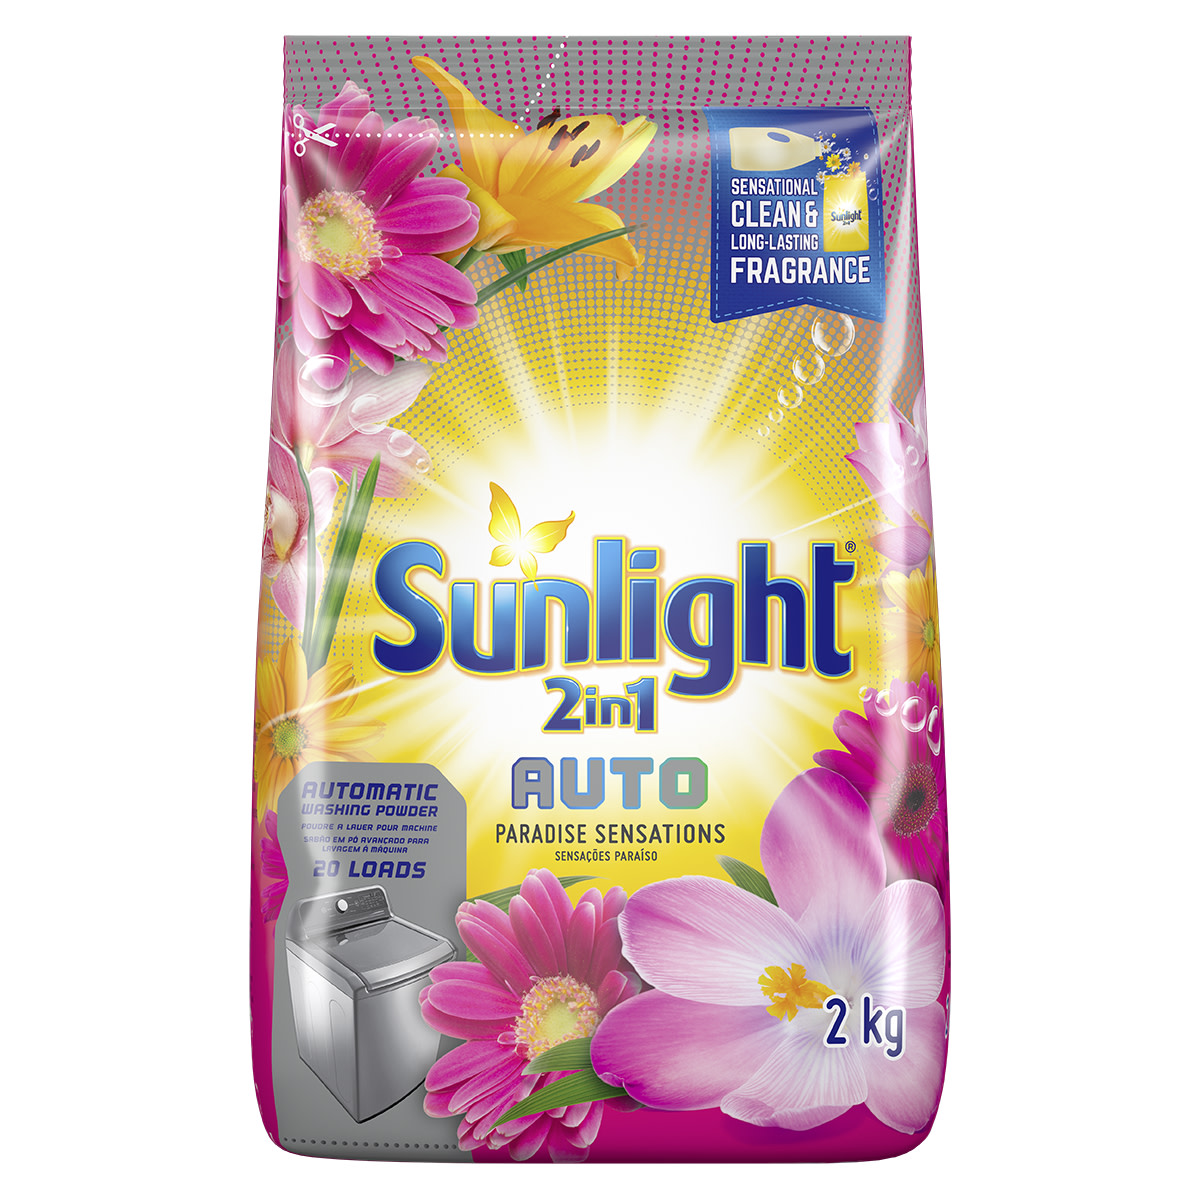 Sunlight 2in1 Paradise Sensations Autowashing Powder